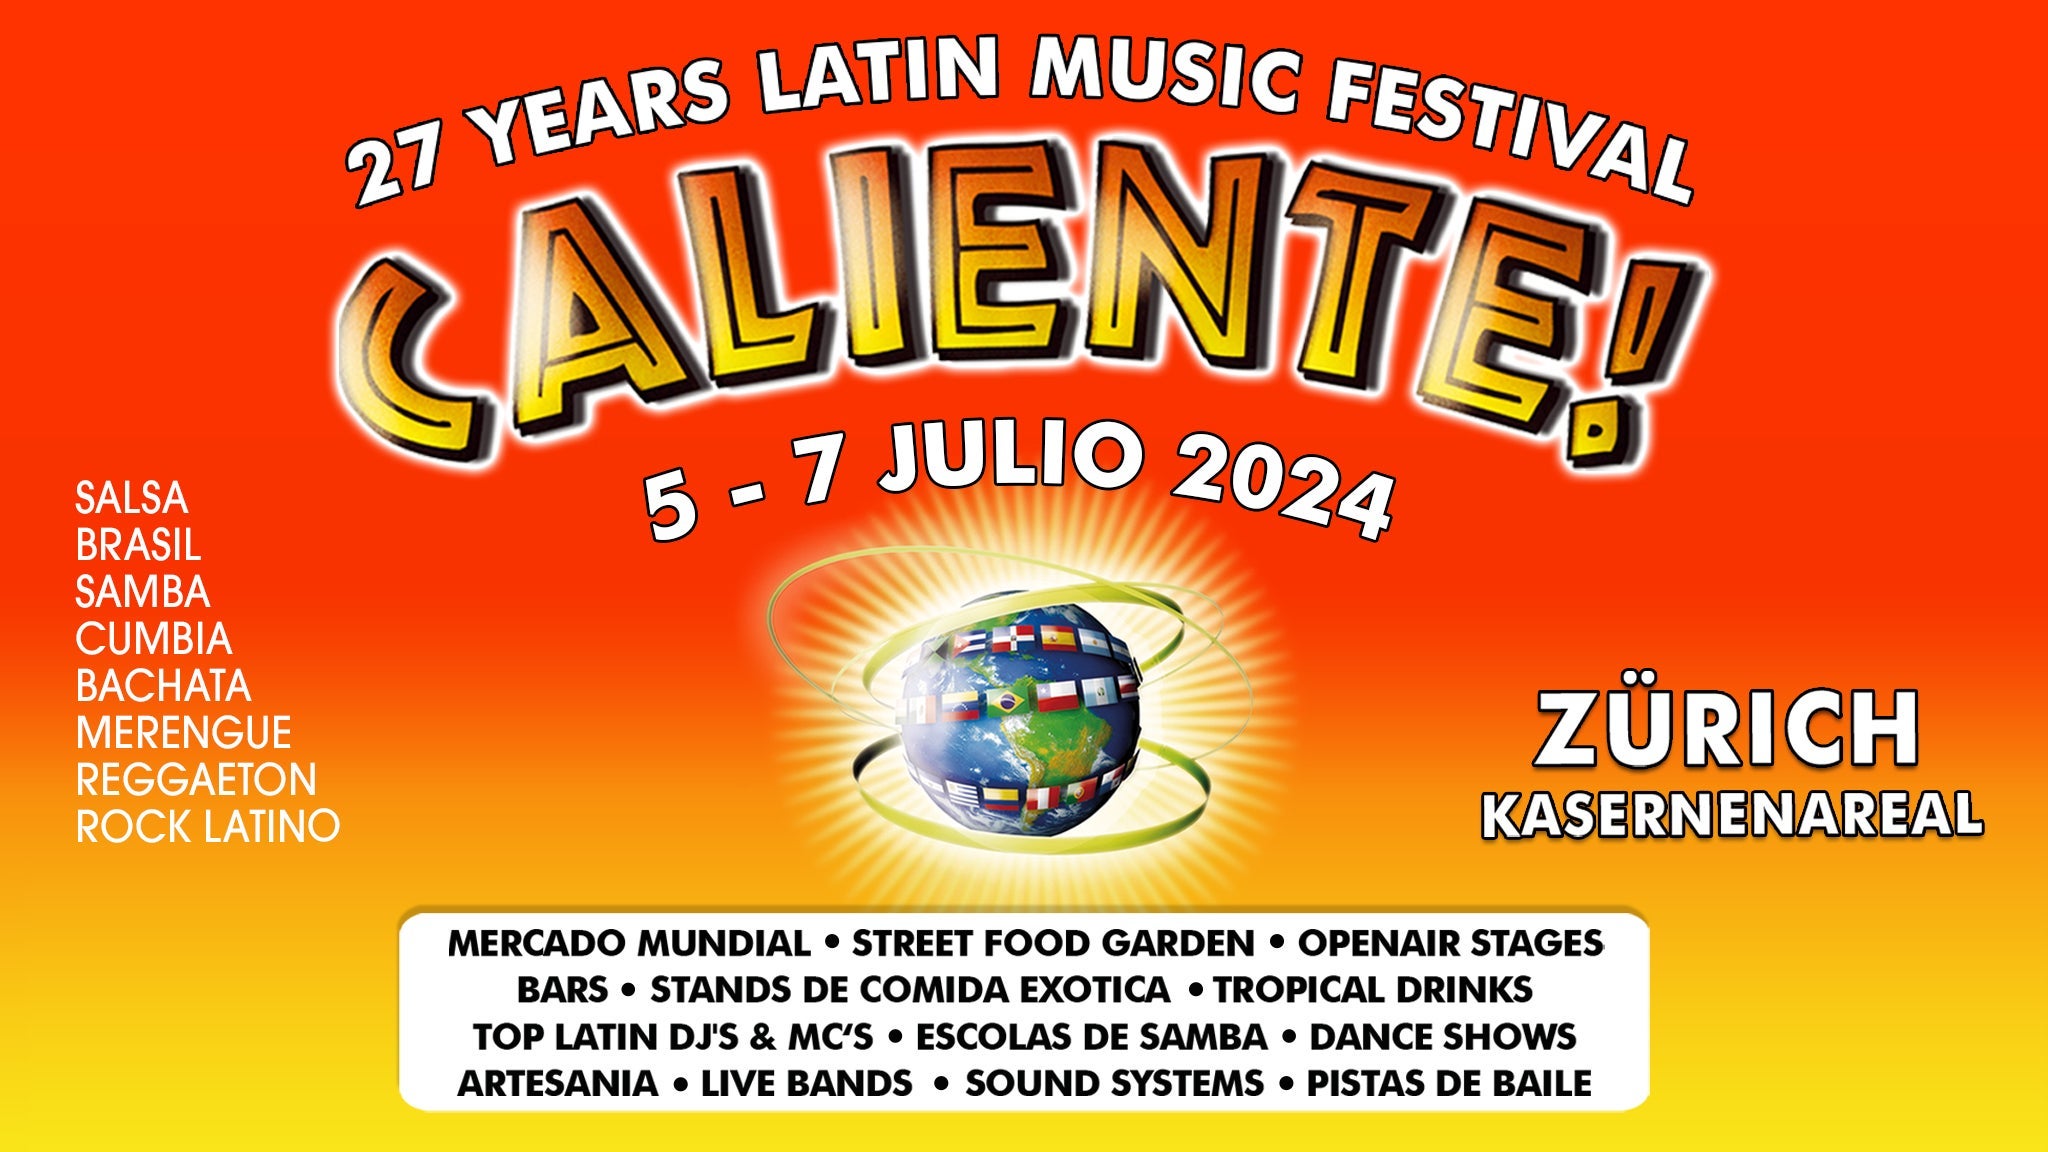 Caliente! Latin Music Festival presale information on freepresalepasswords.com